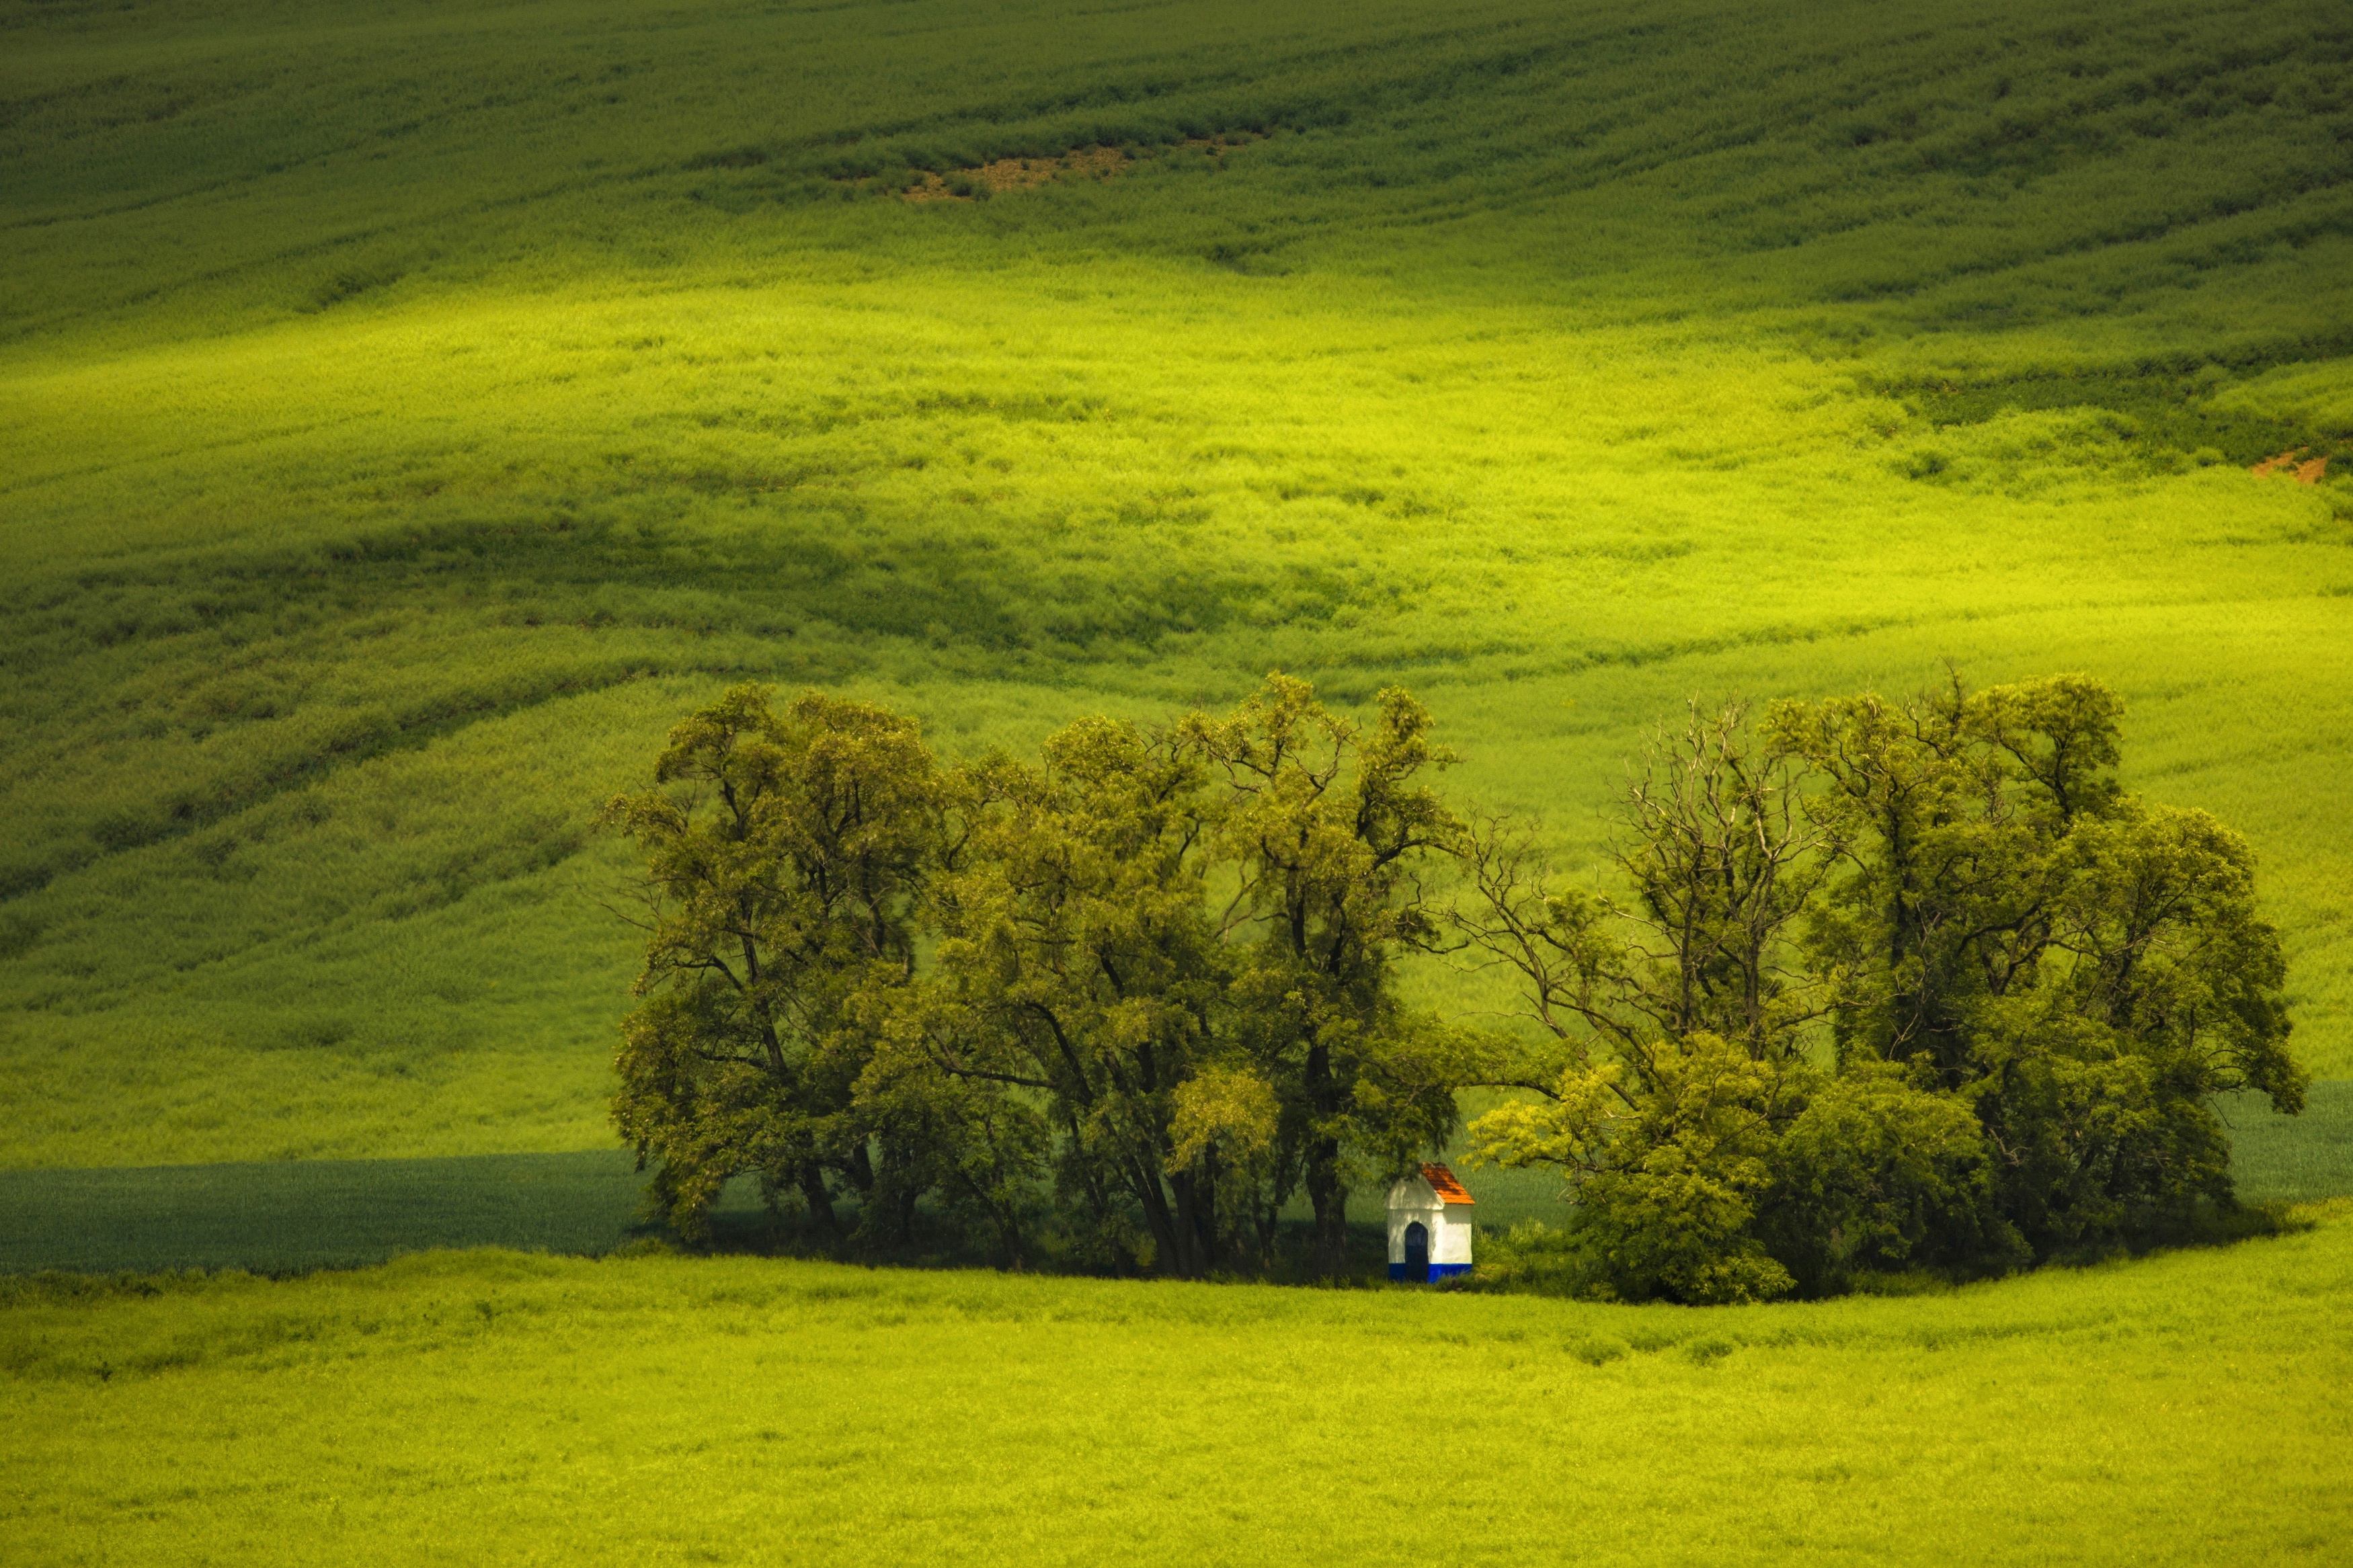 Tree, Agricultural, Landscape, Moravia, Green, Fields, Rural, Moravske-toskansko, Damian Cyfka